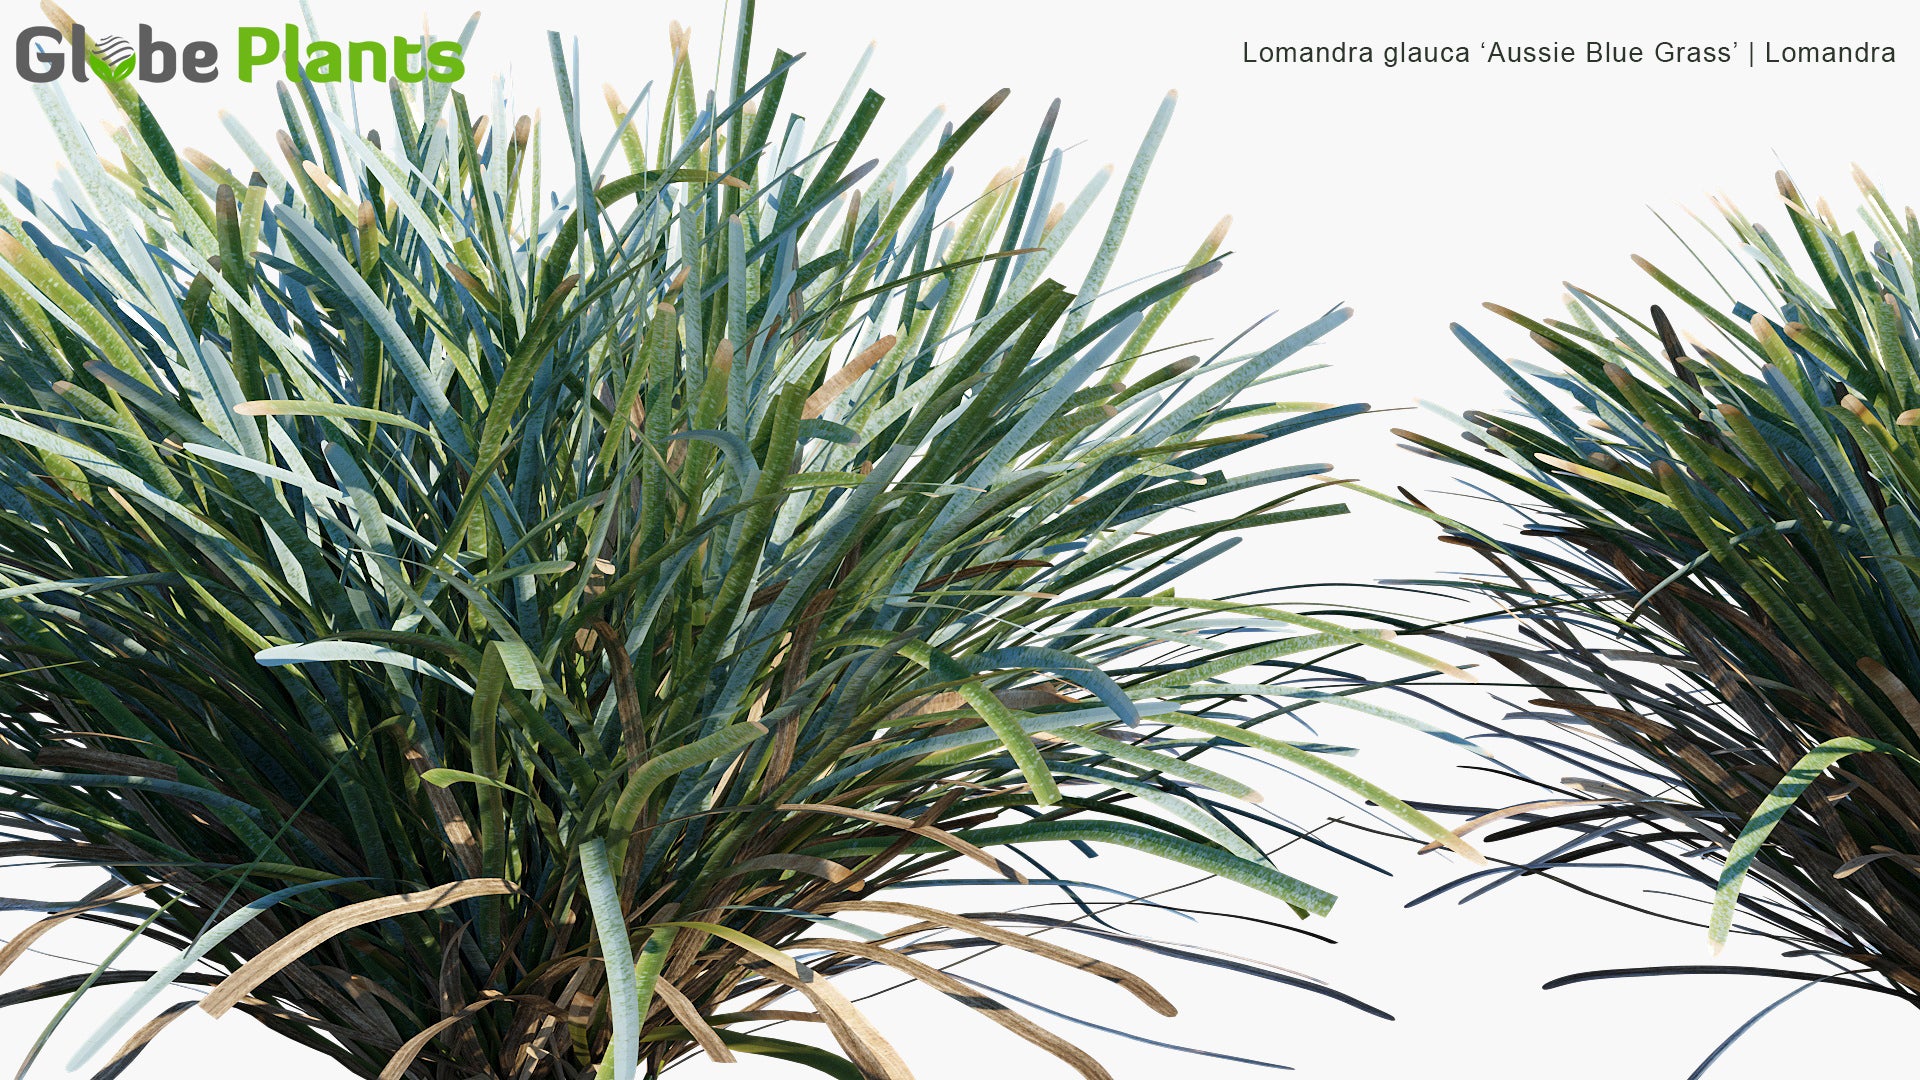 Lomandra Glauca 'Aussie Blue Grass' - Mat Rush